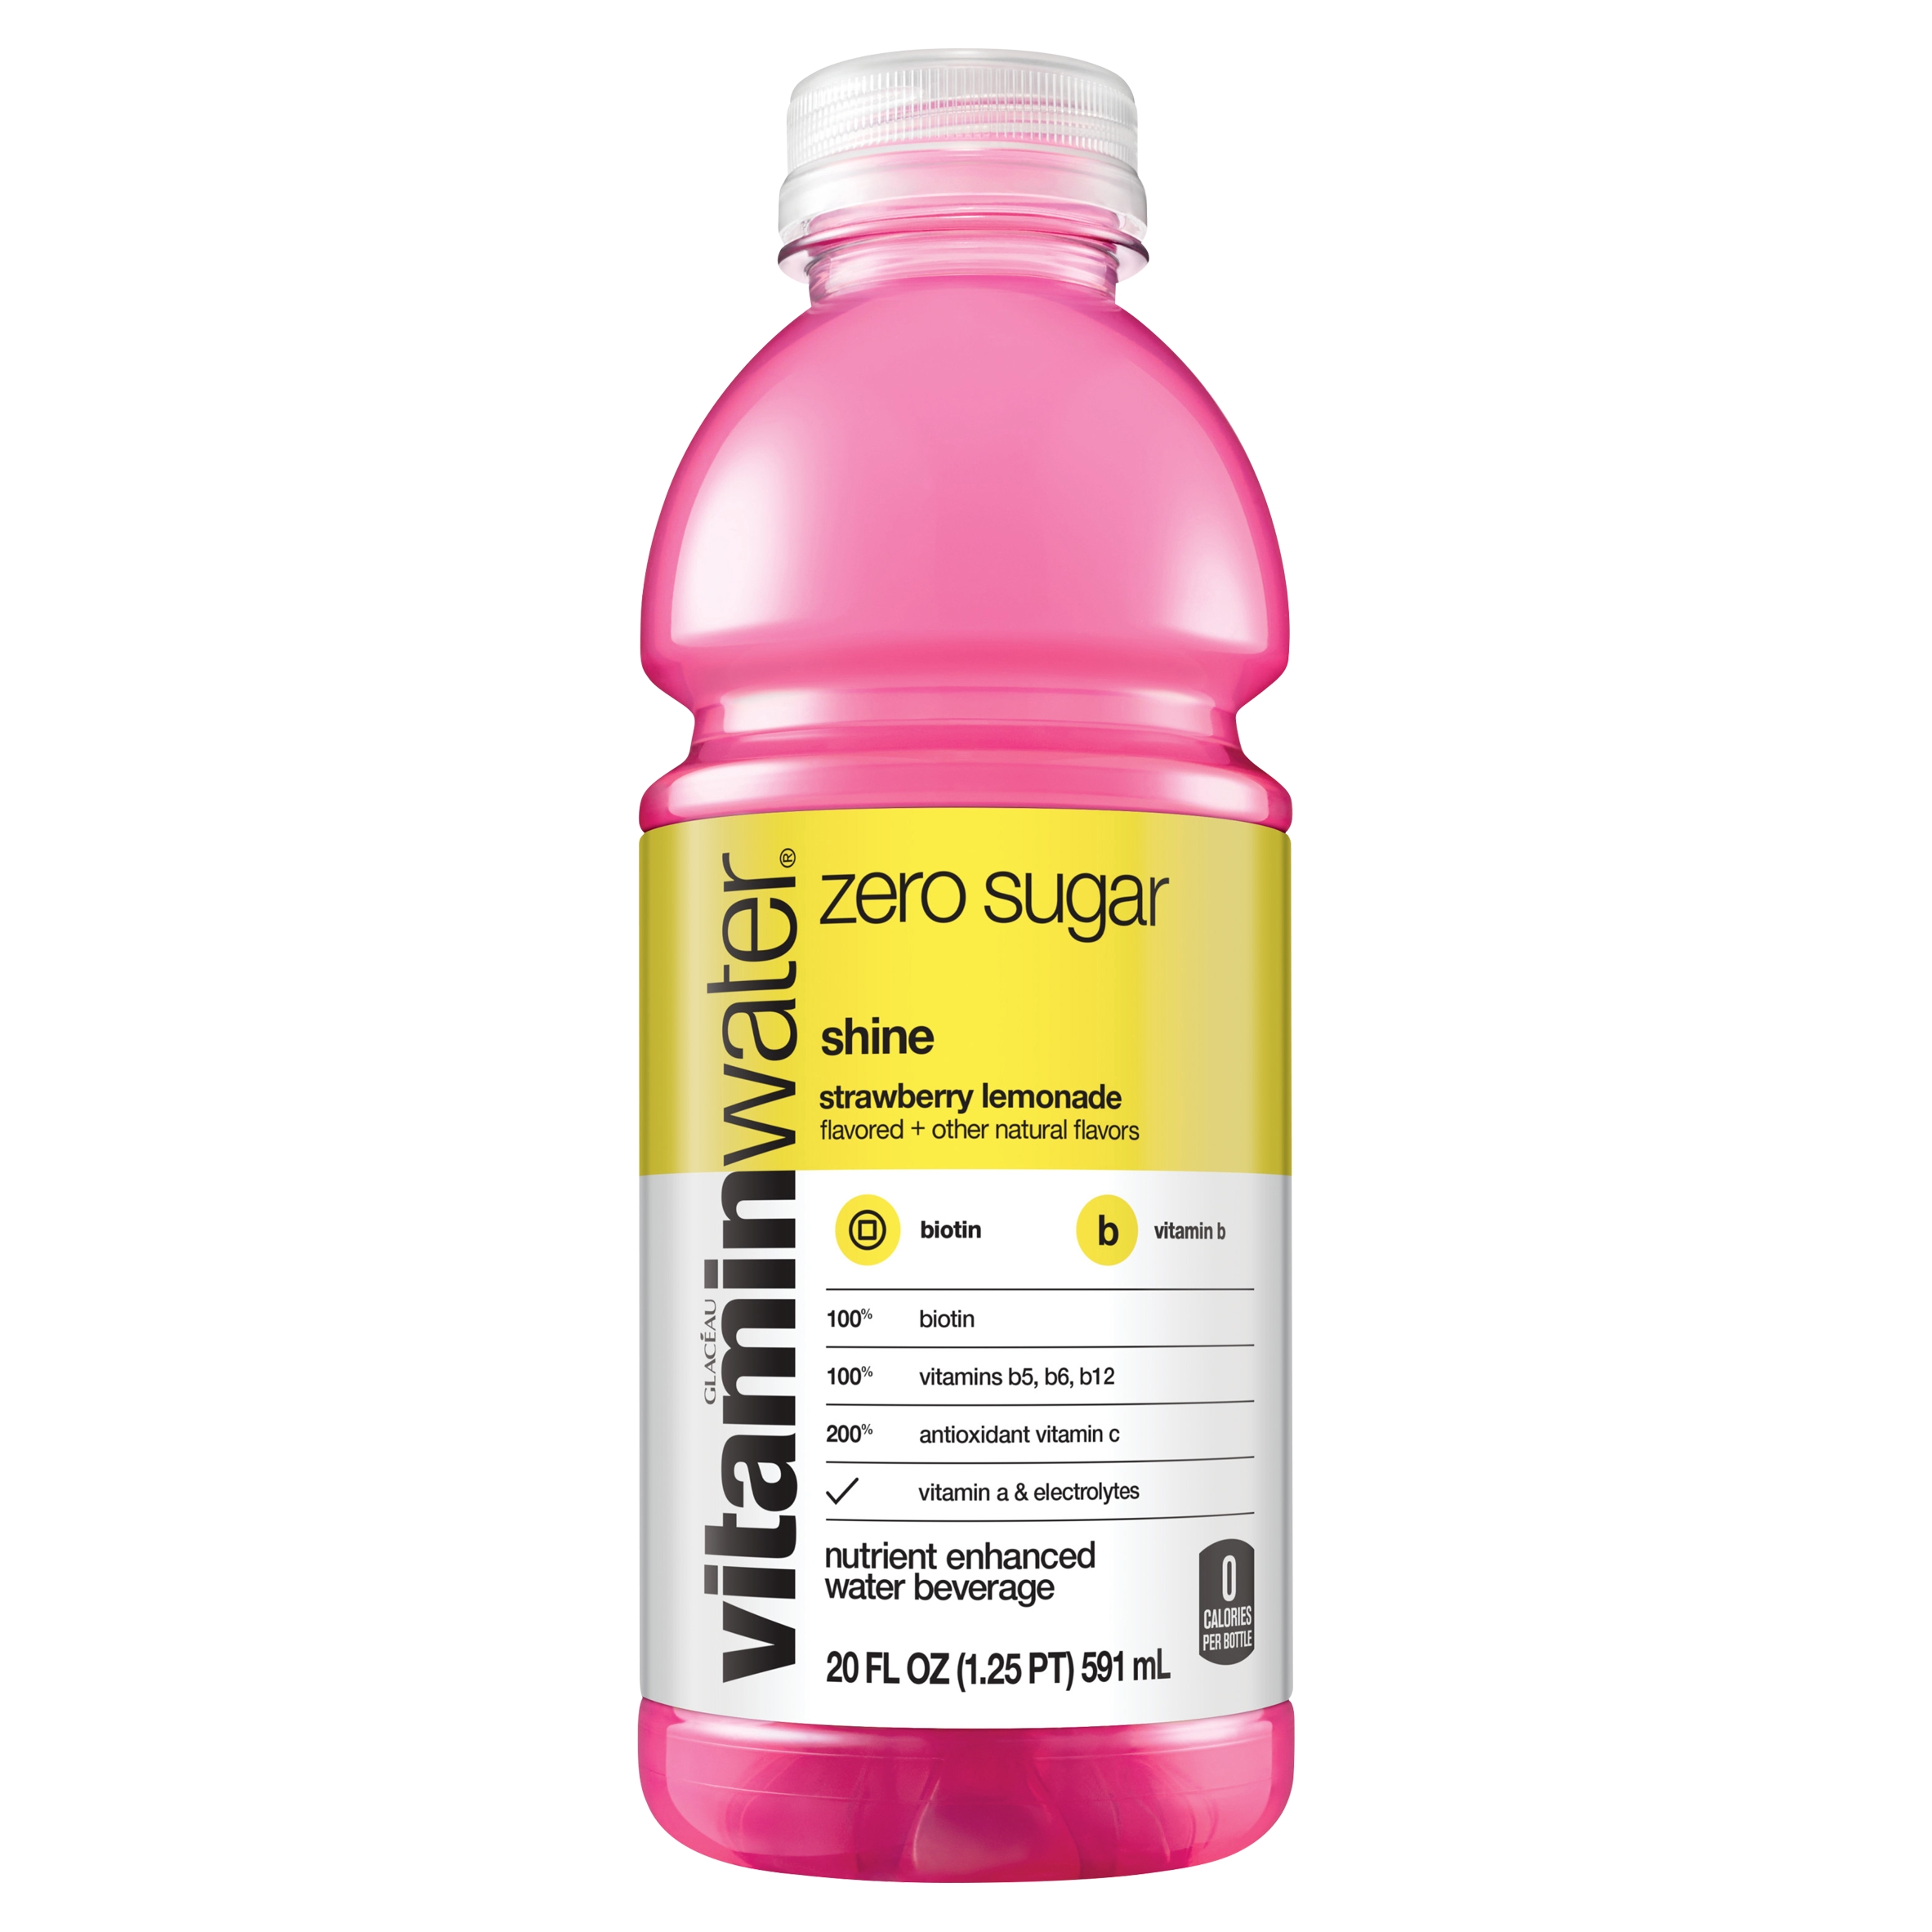 vitaminwater zero sugar shine Bottle, 20 fl oz - Walmart.com - Walmart.com